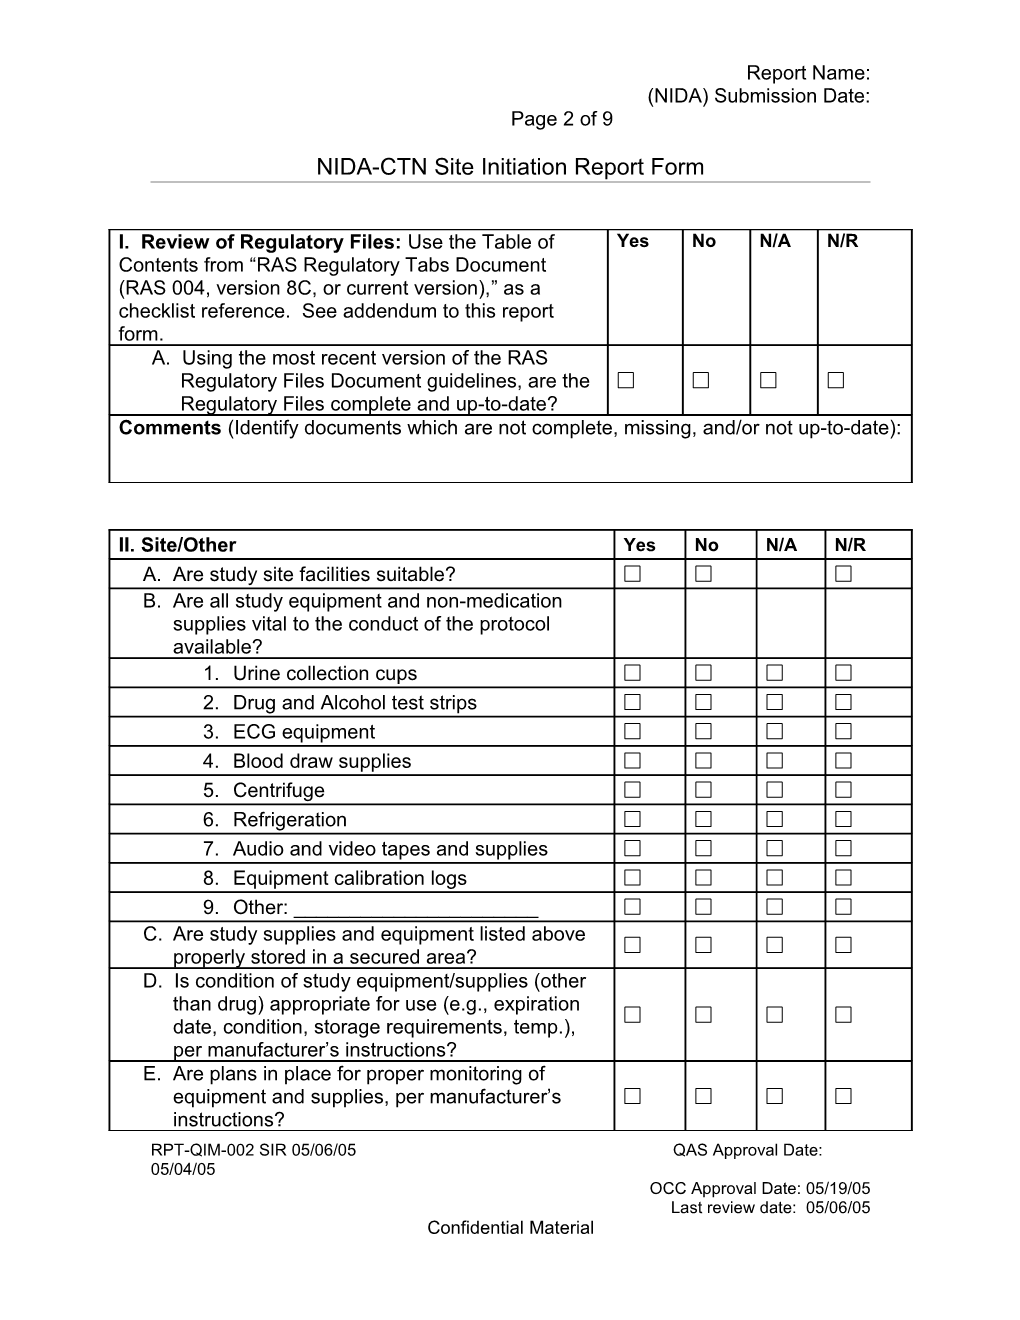 NIDA-CTN Site Initiation Report Form